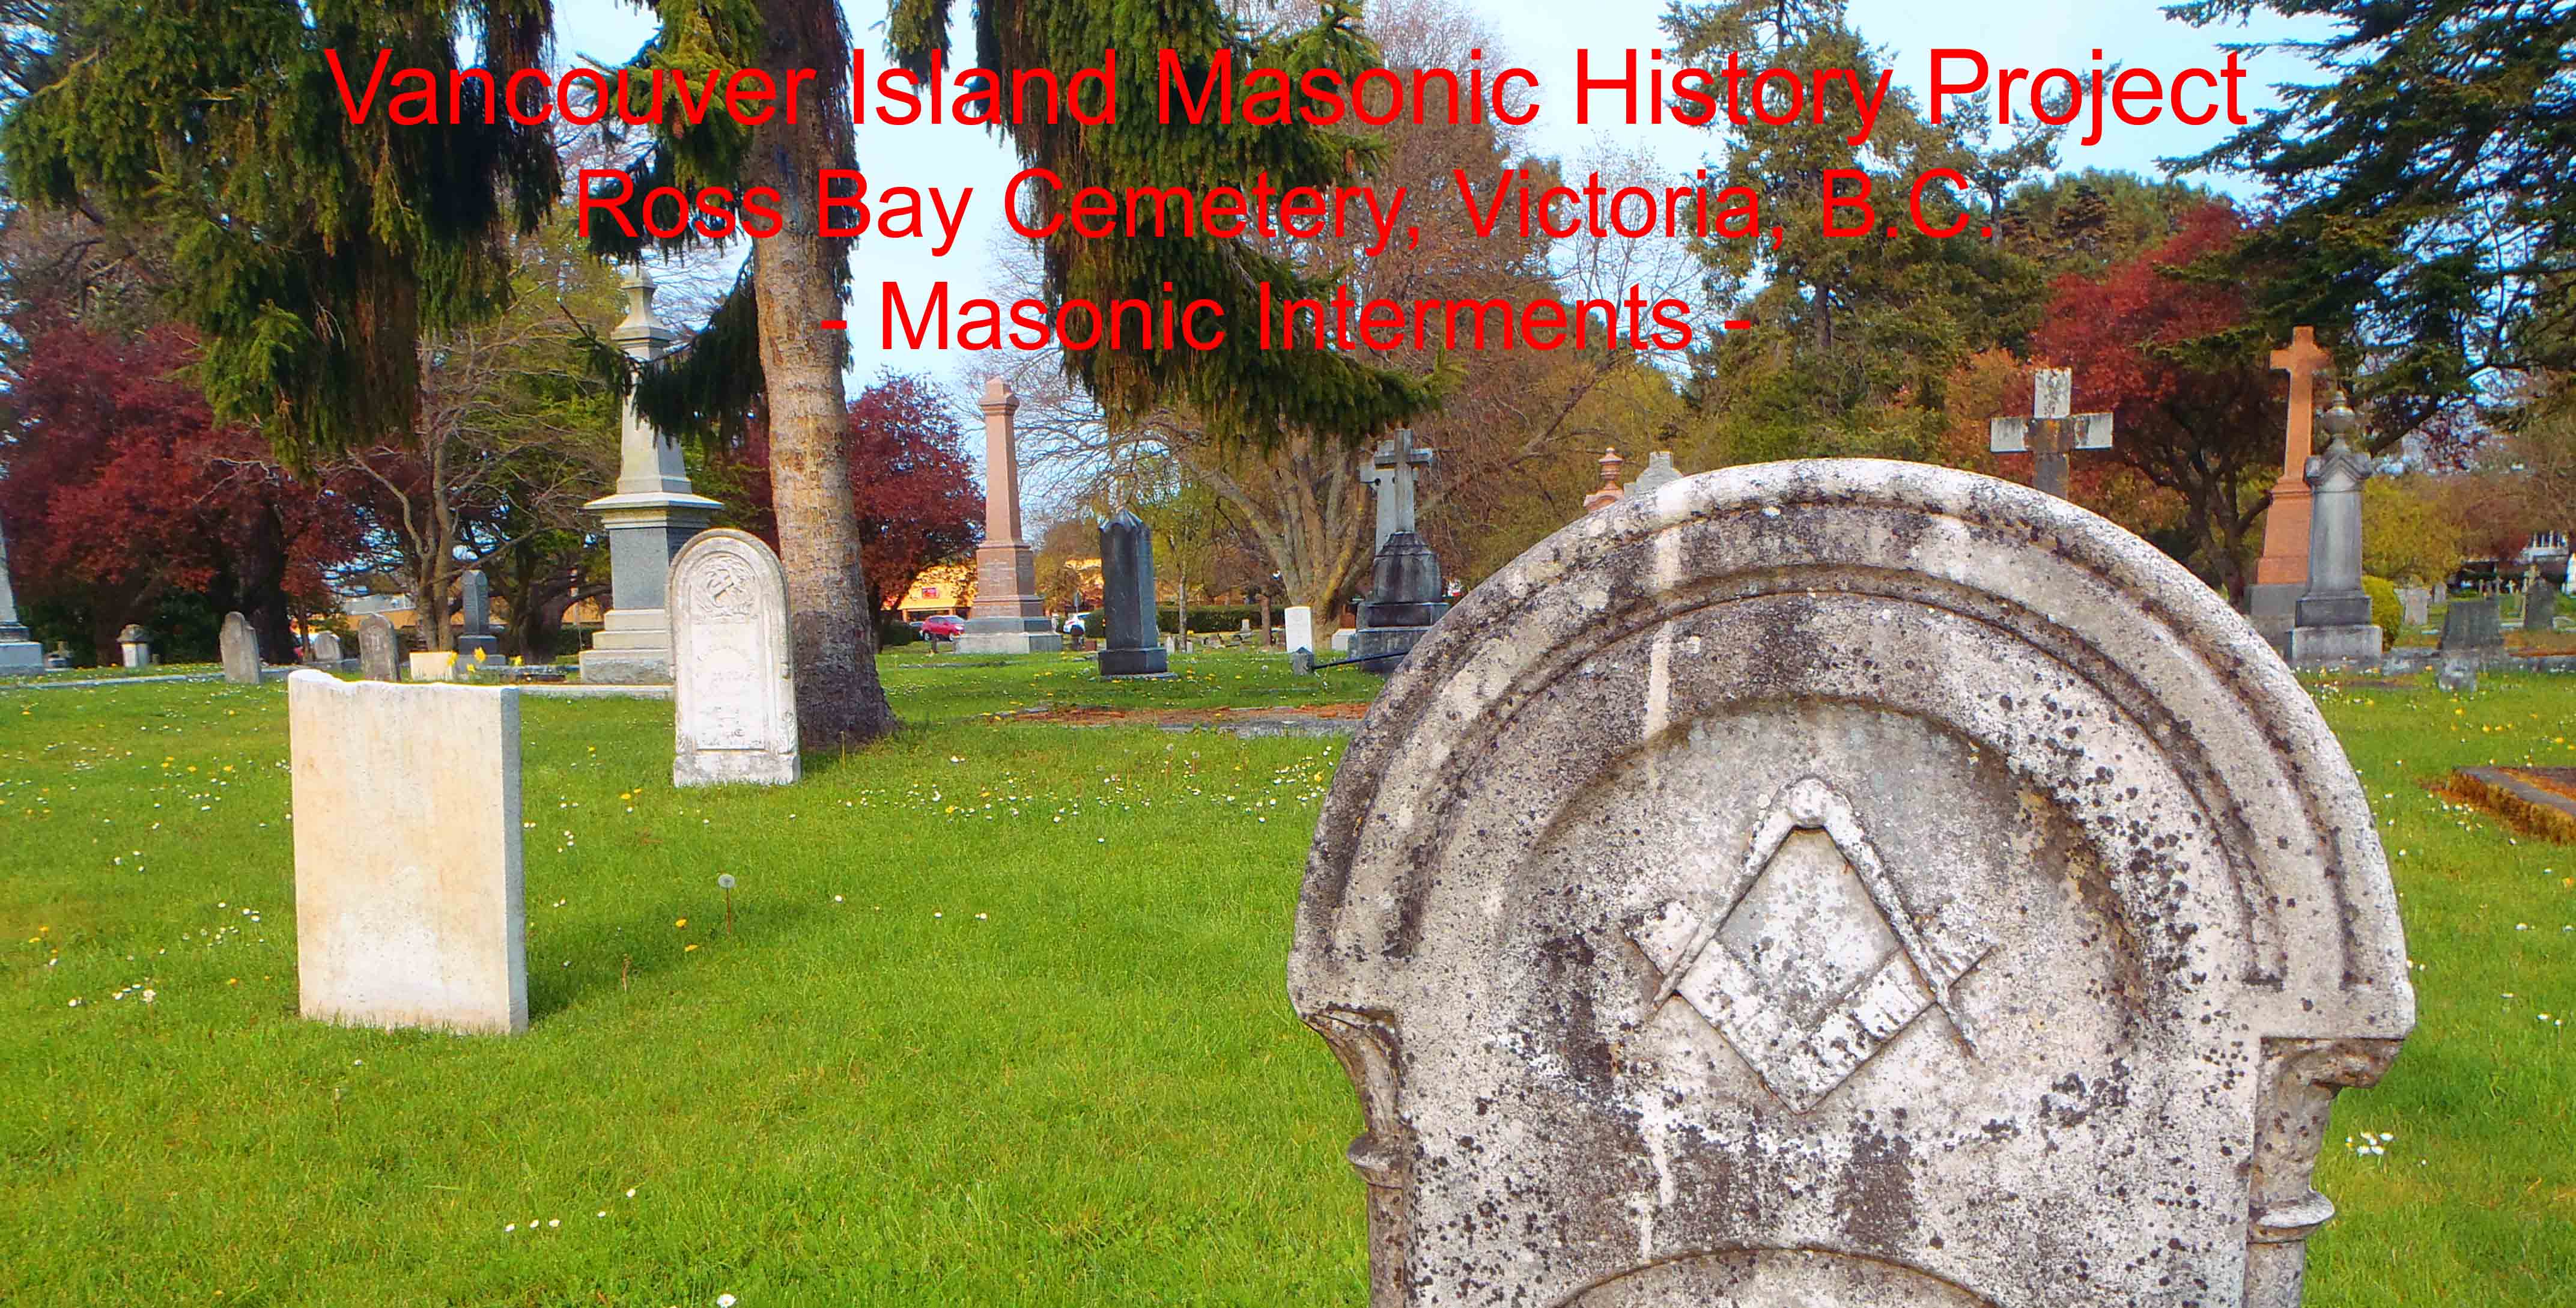 Ross Bay Cemetery Masonic Interments